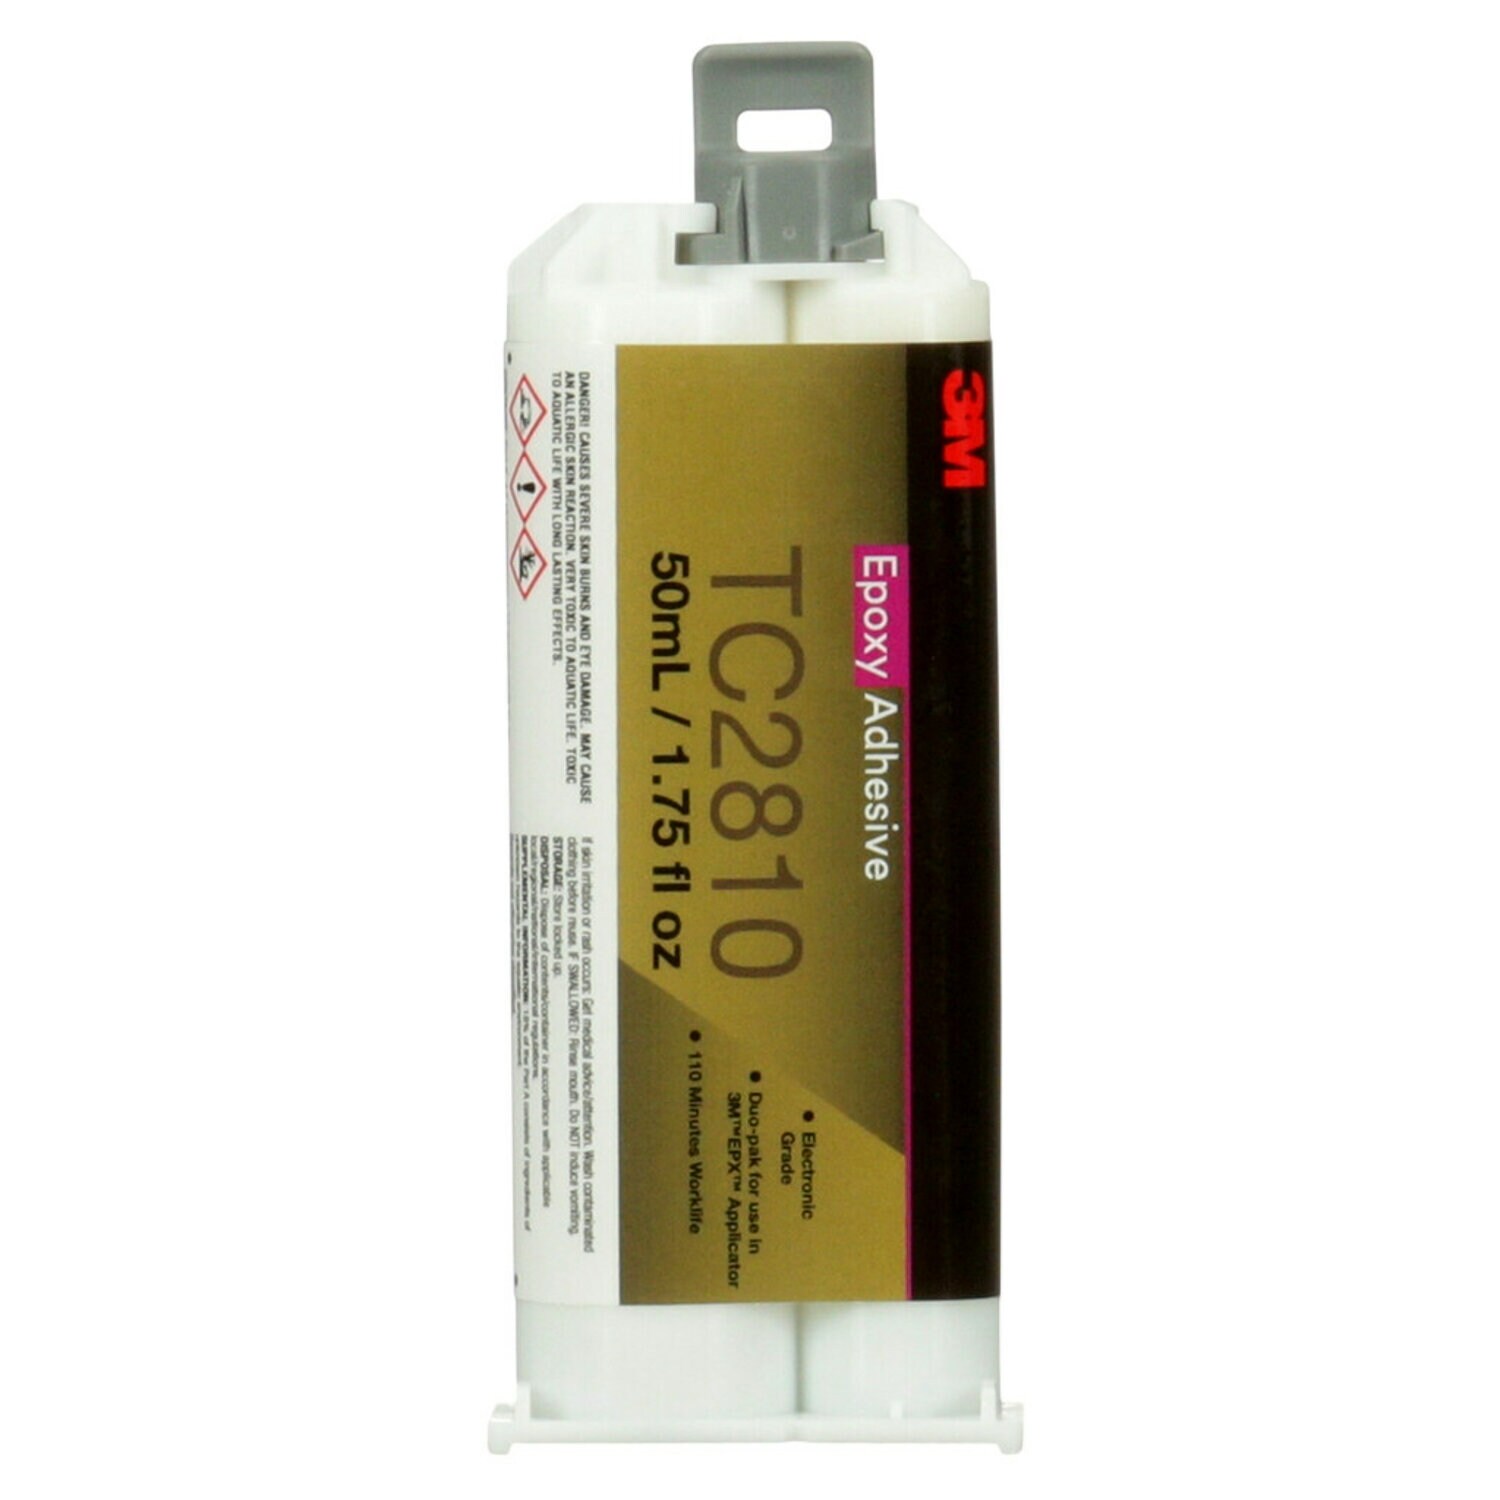 7100149199 - 3M Thermally Conductive Epoxy Adhesive TC2810 Part A, 5-gal (23 kg)
Pail